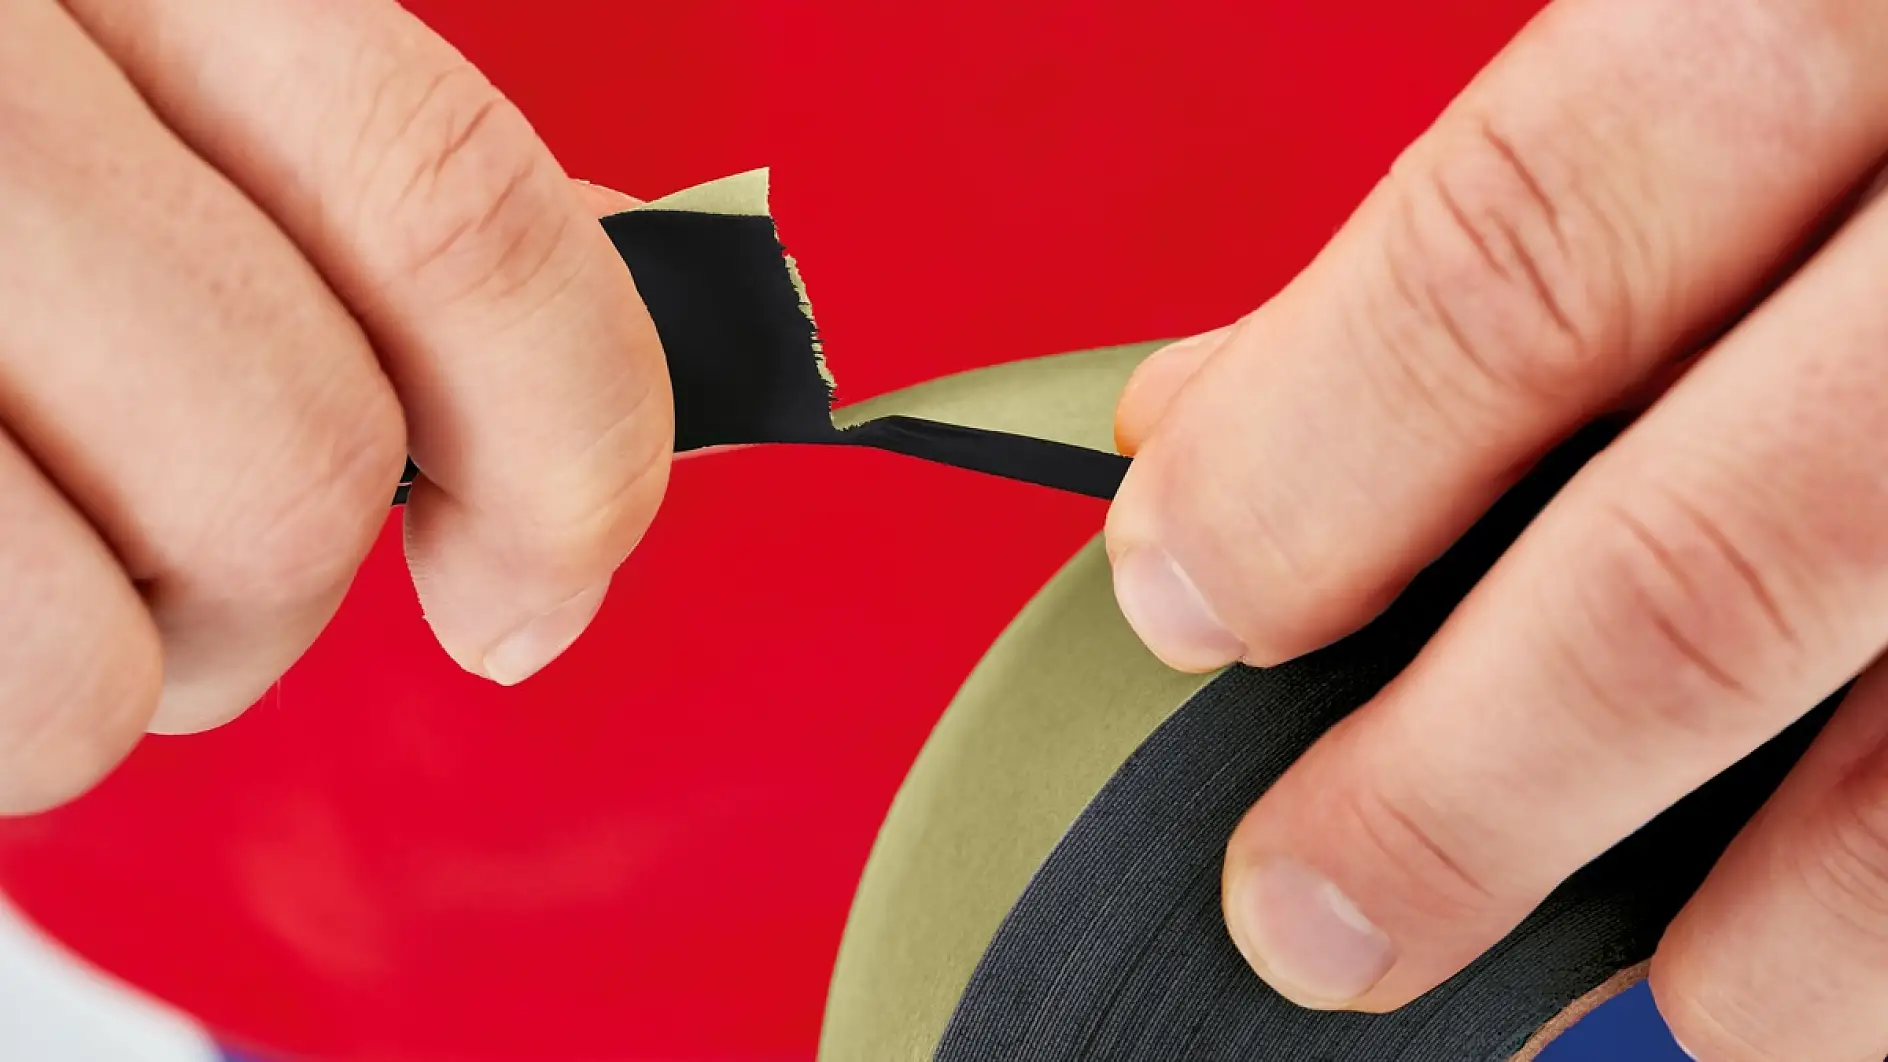 tesa® 5938 Removable Black Carpet Tape is easily hand-tearable